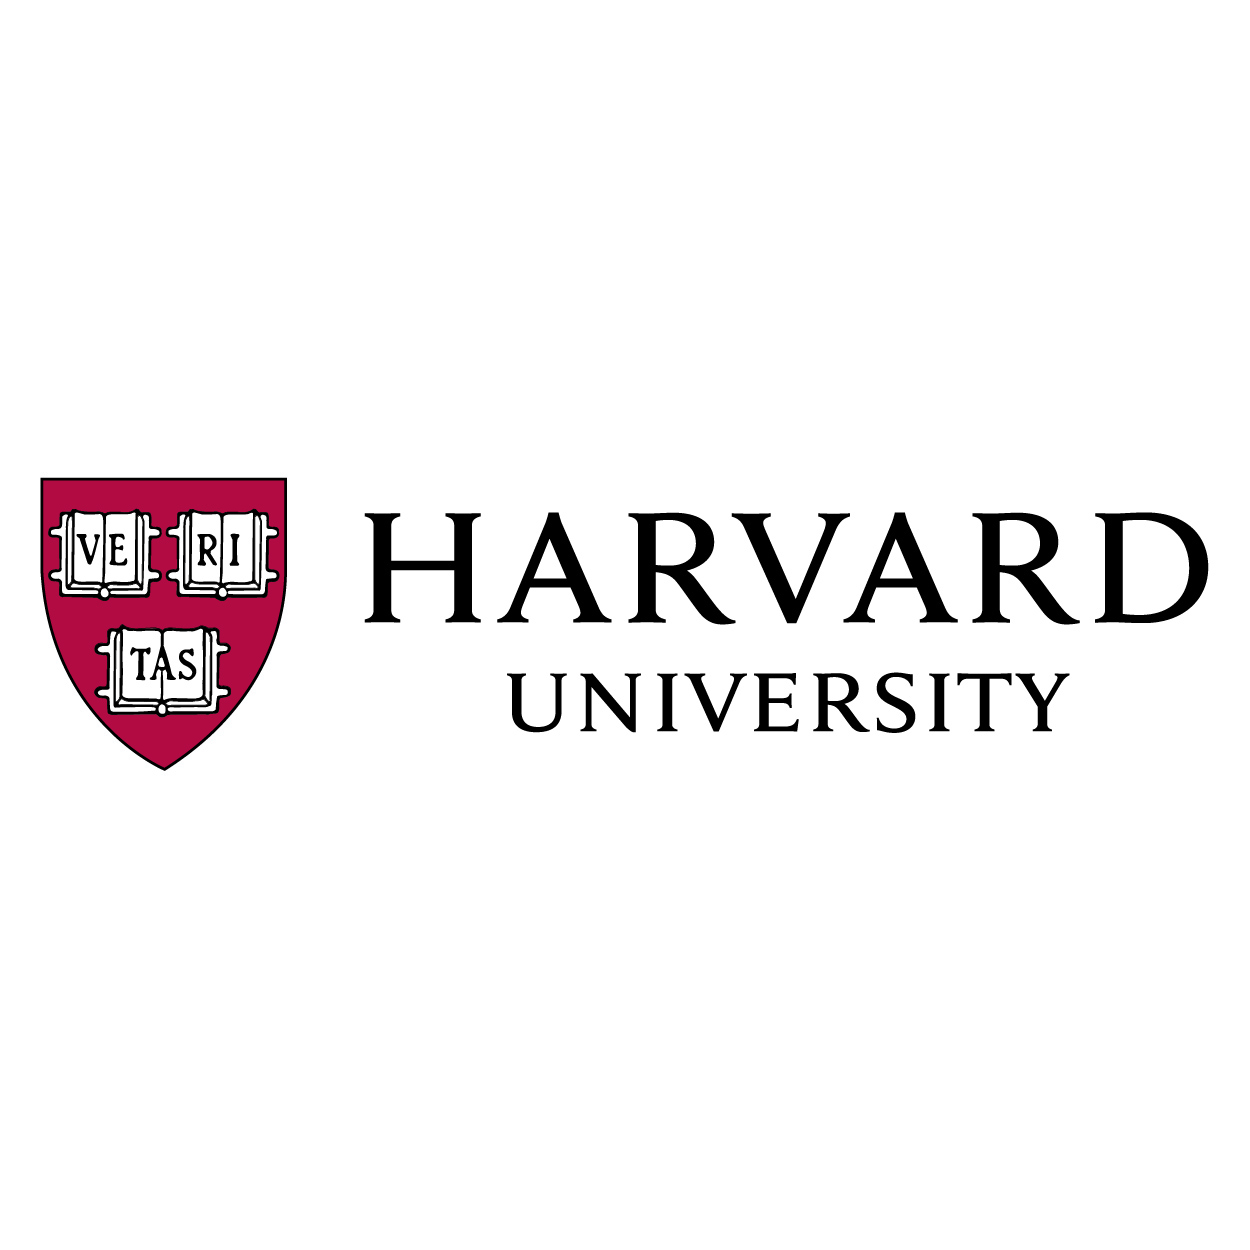 Harvard University website